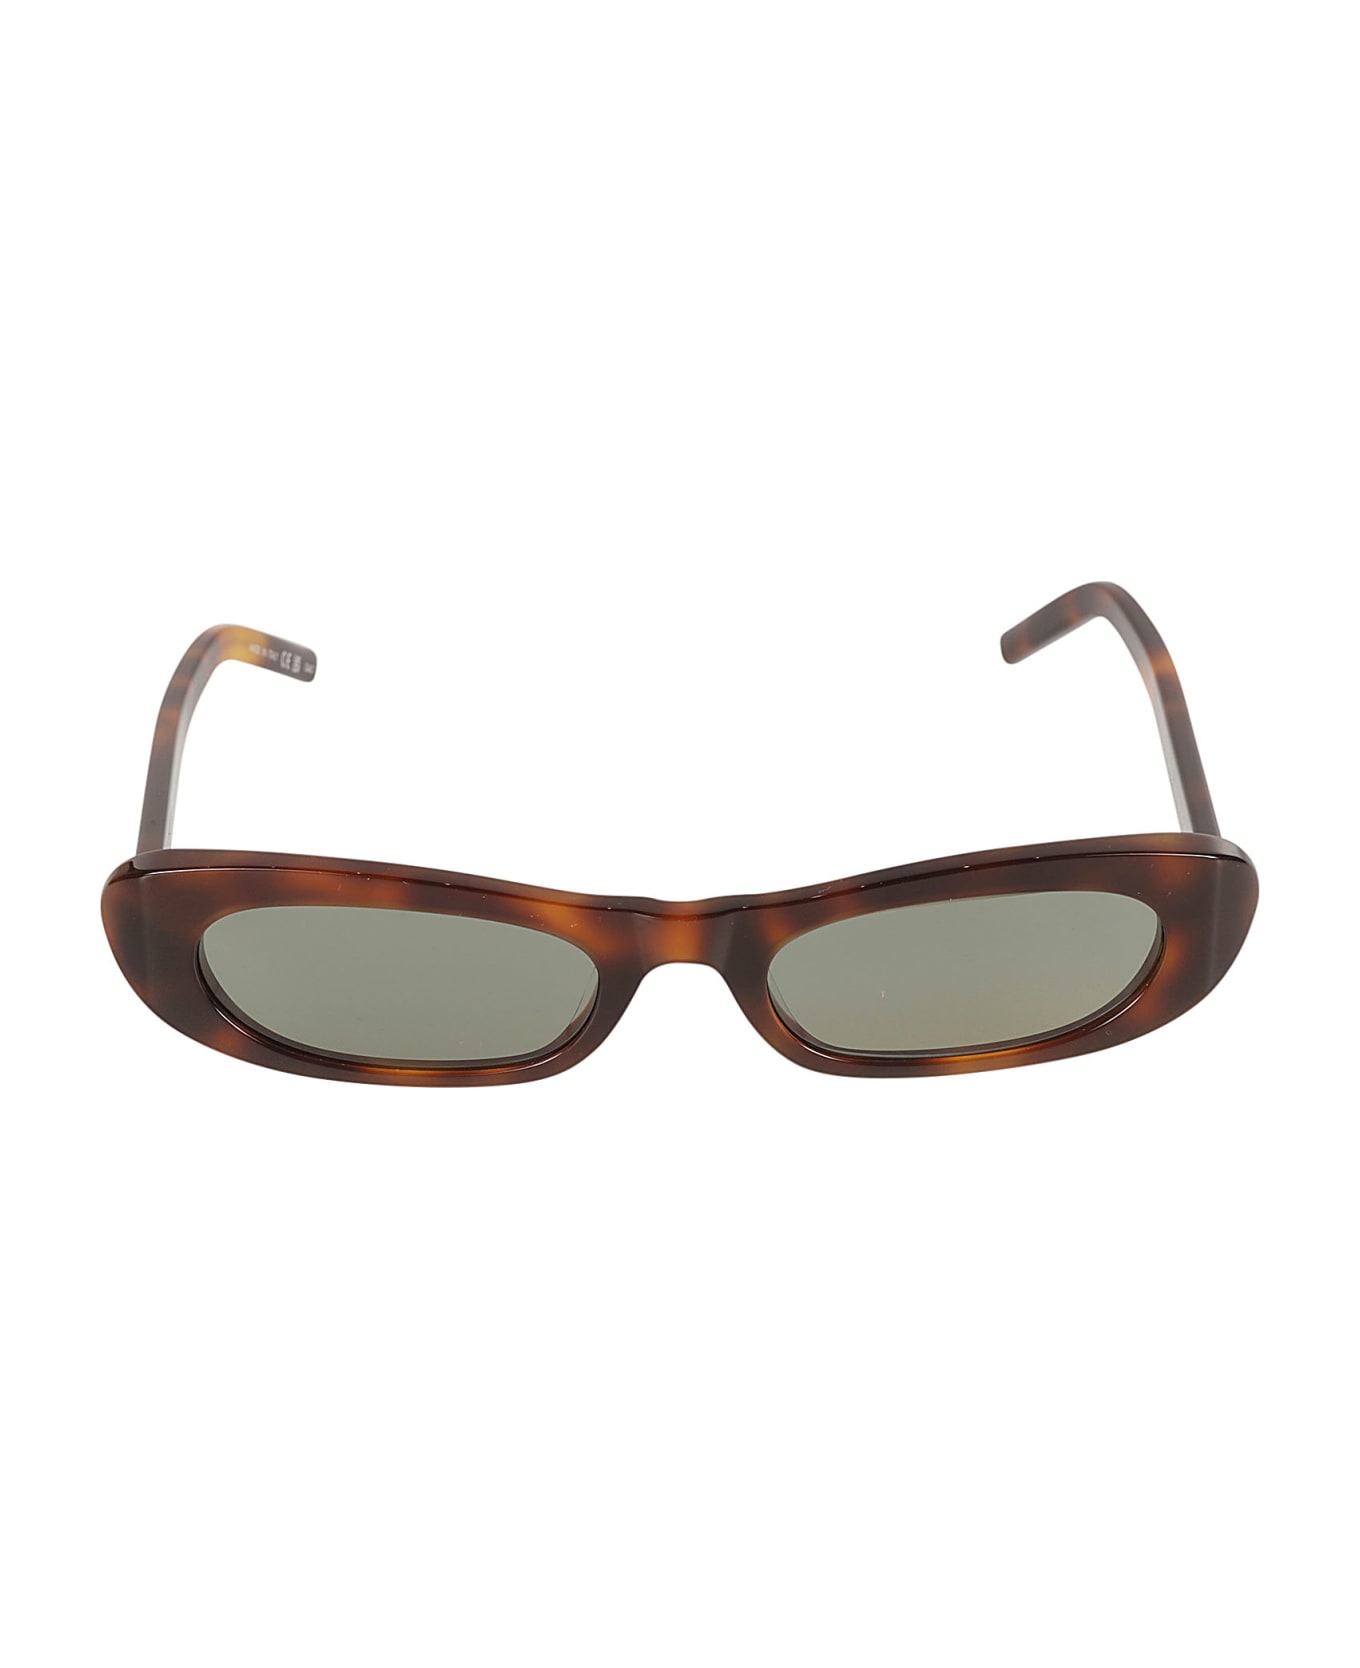 Saint Laurent Eyewear Oval Frame Flame Effect Sunglasses - Havana/Green